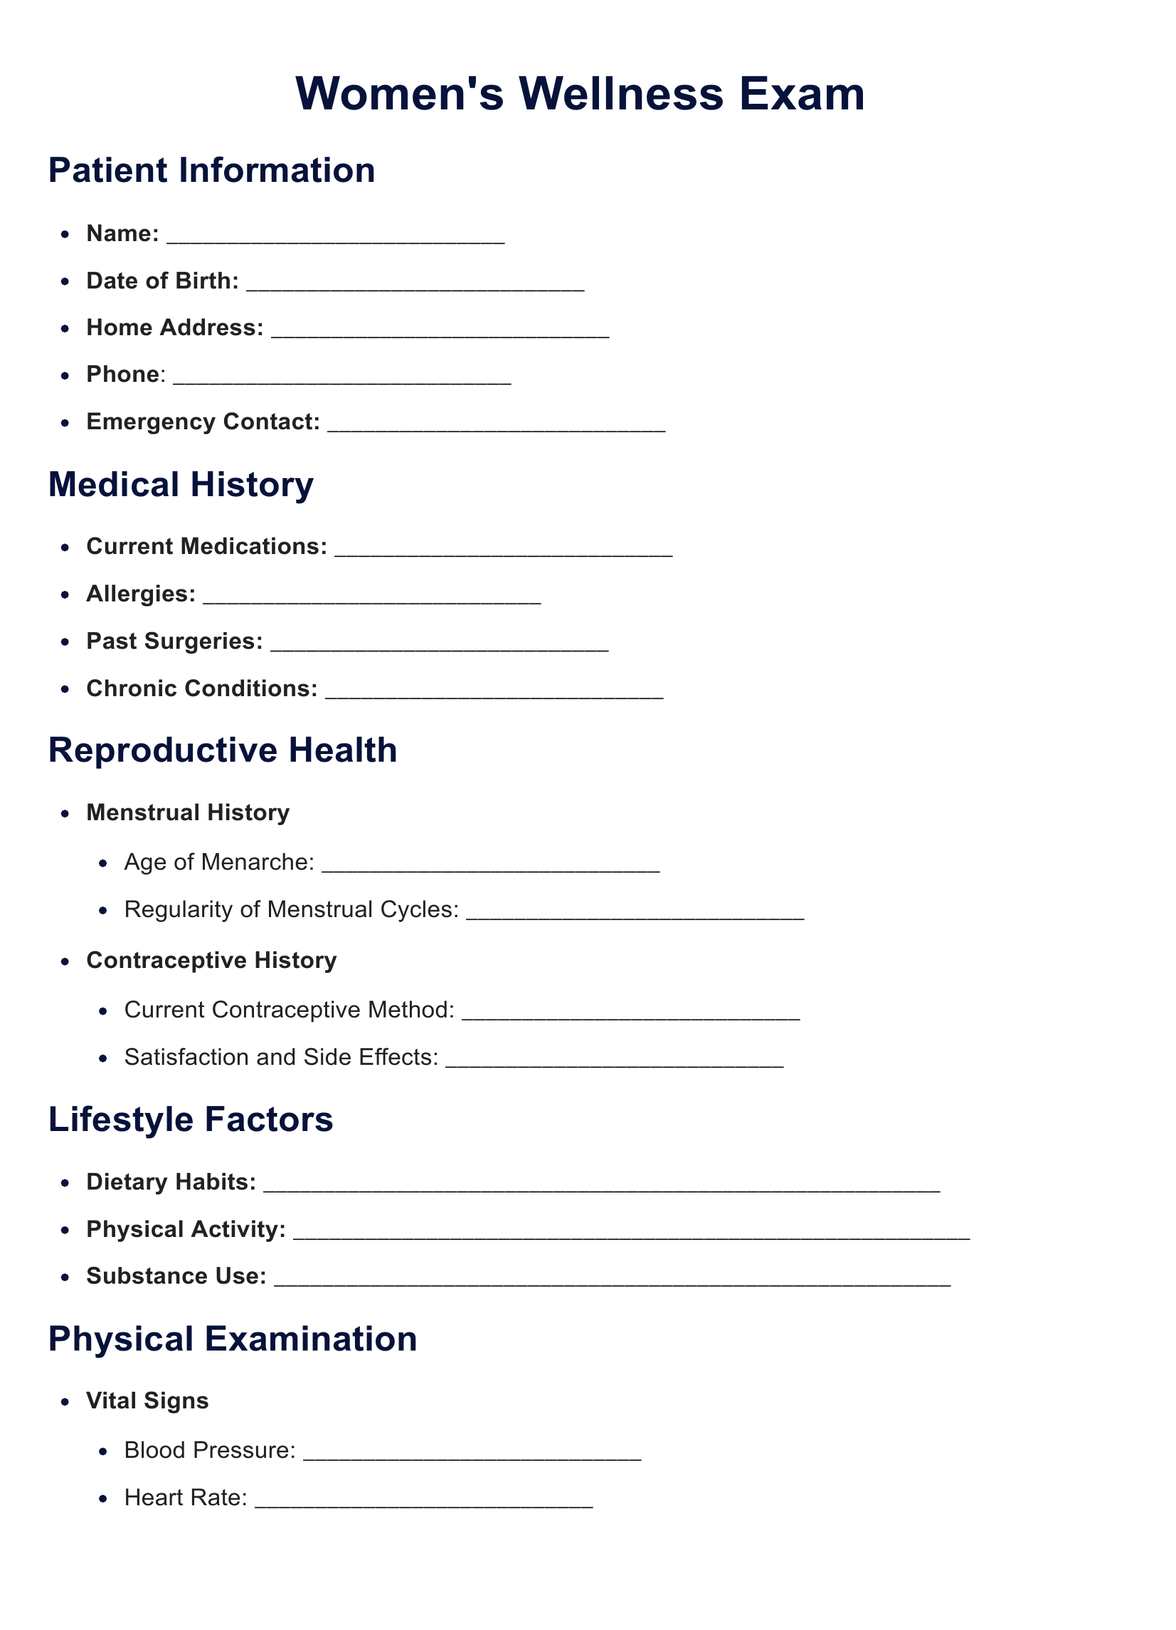 Women's Wellness Exam PDF Example